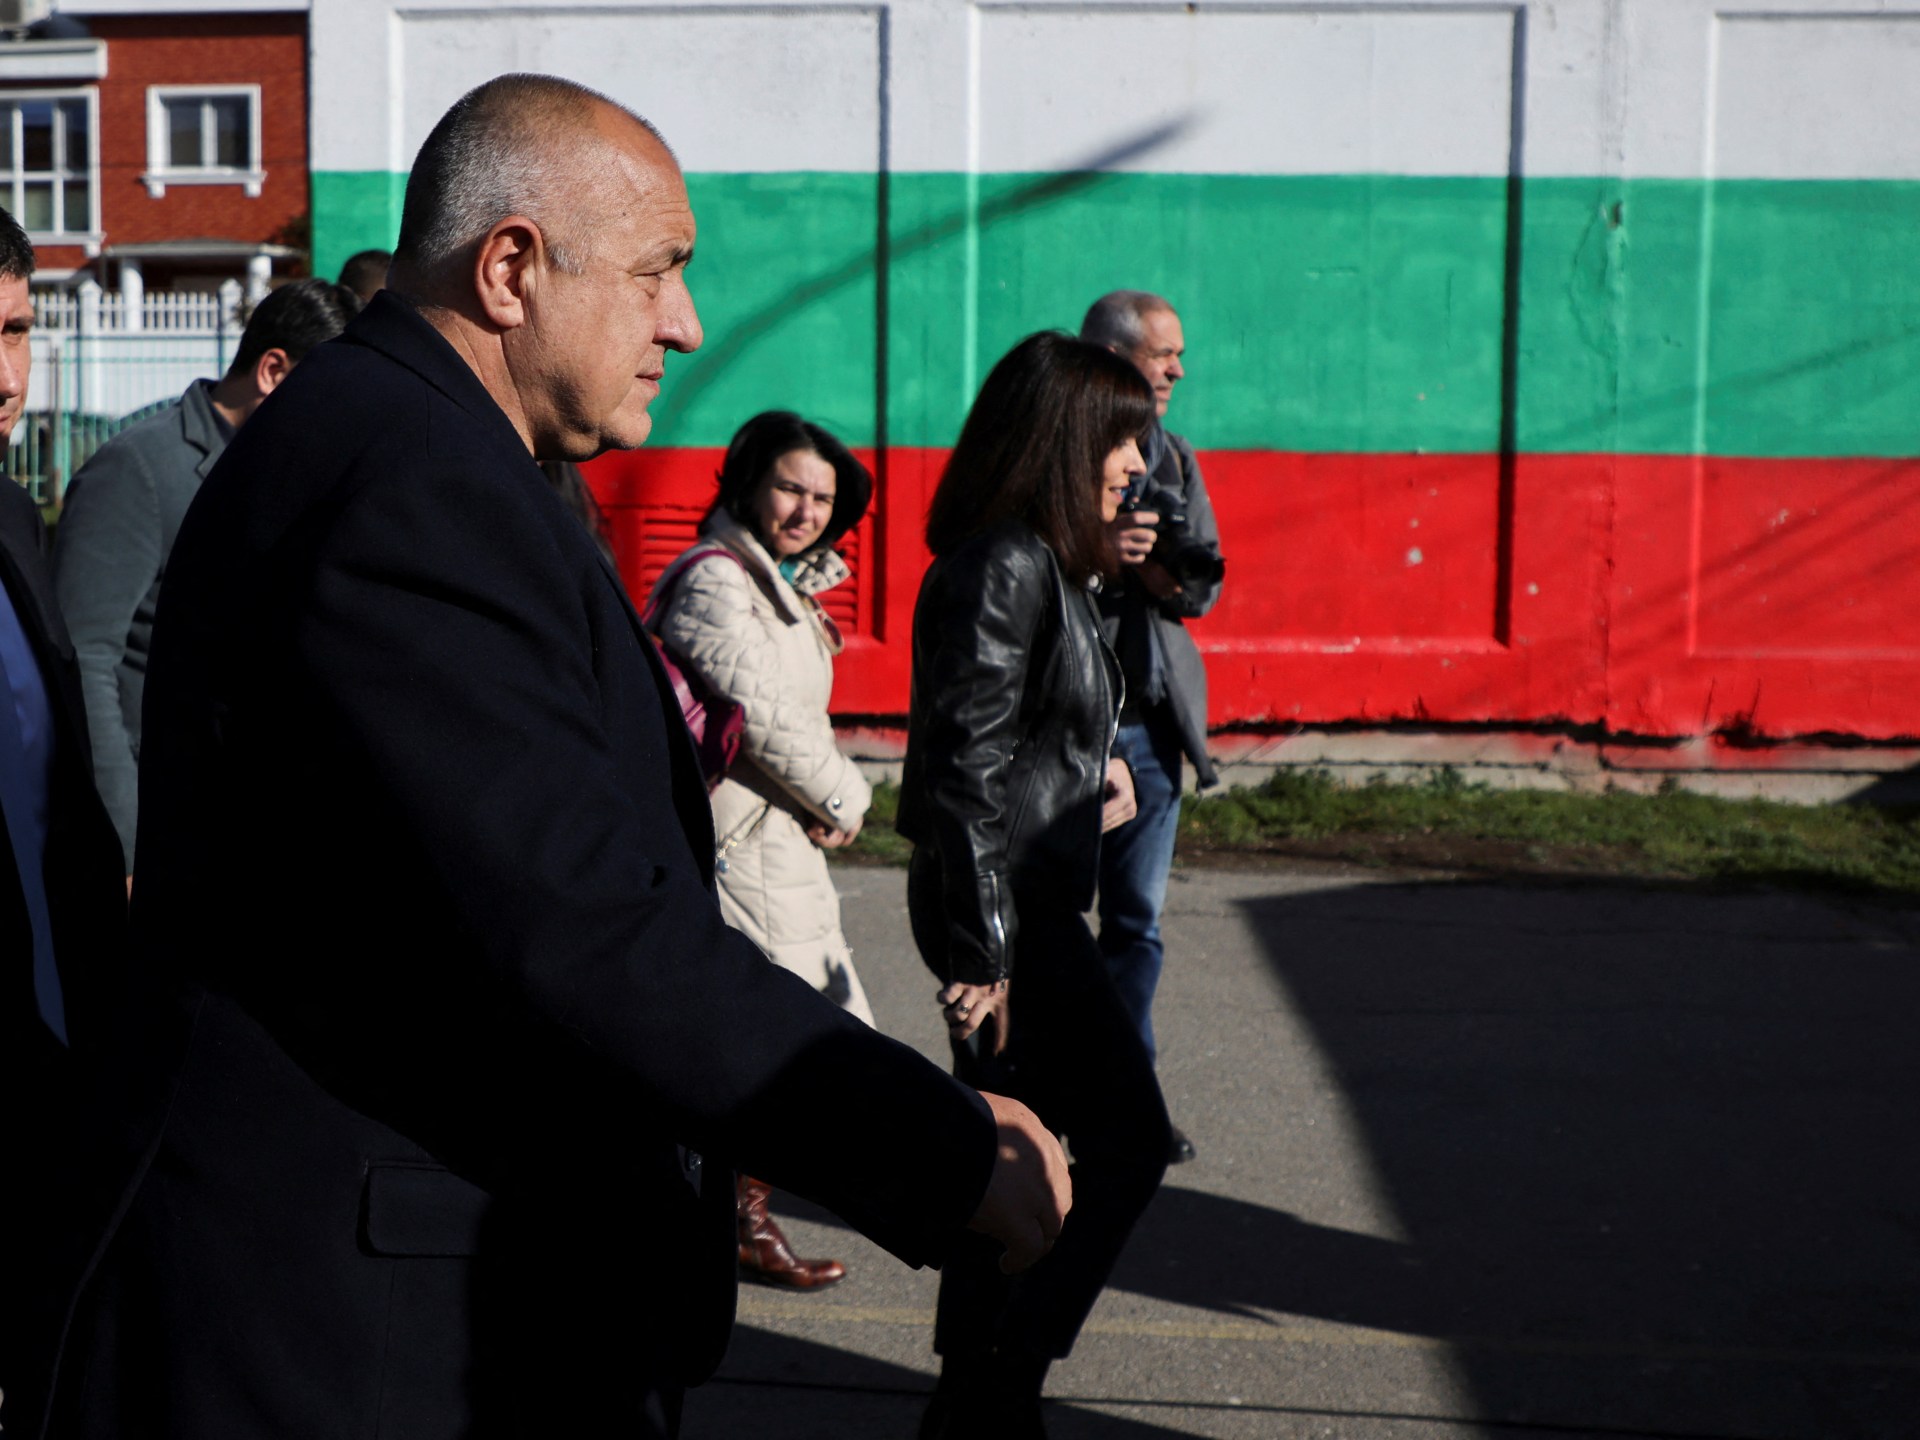 Berapa banyak pemilihan yang diperlukan untuk mengakhiri krisis di Bulgaria?  |  Pemilu